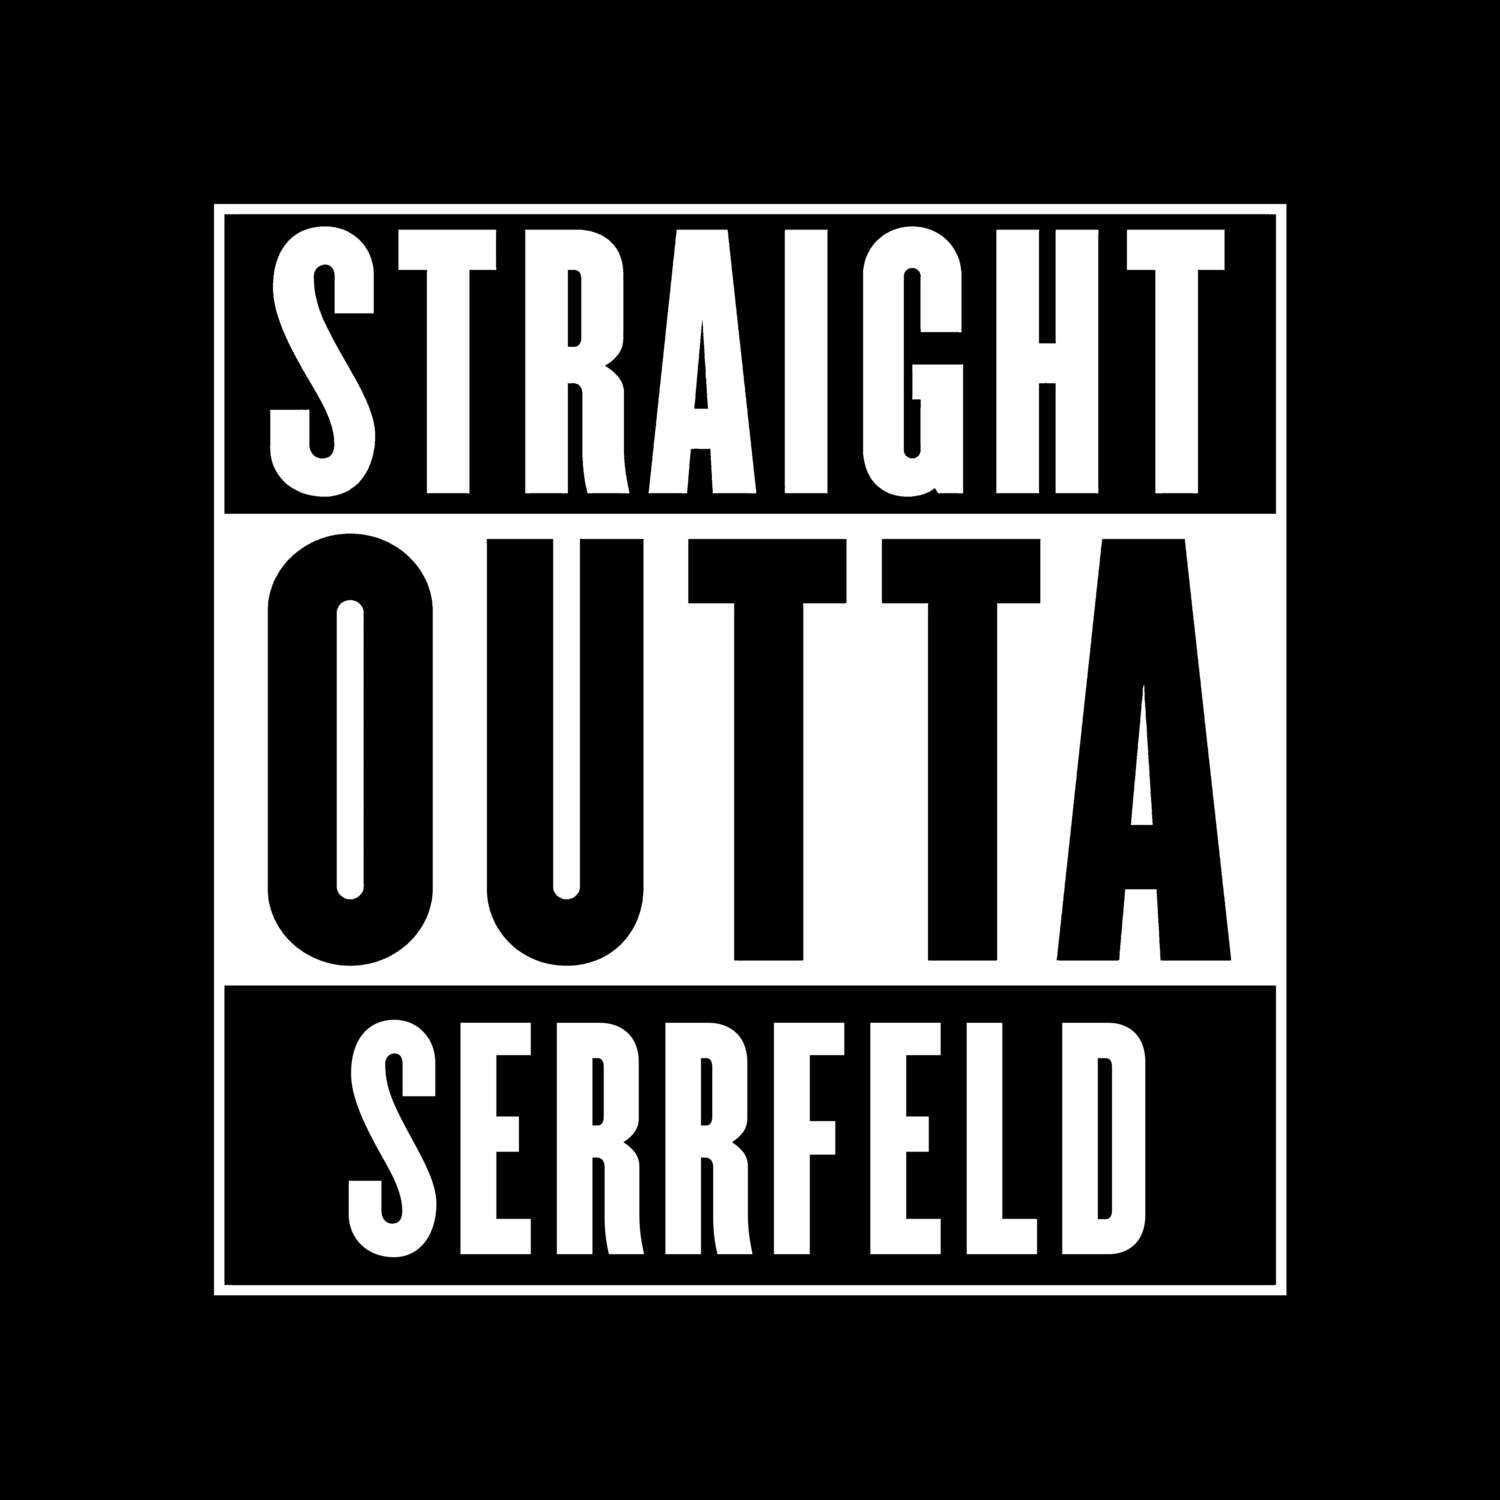 Serrfeld T-Shirt »Straight Outta«